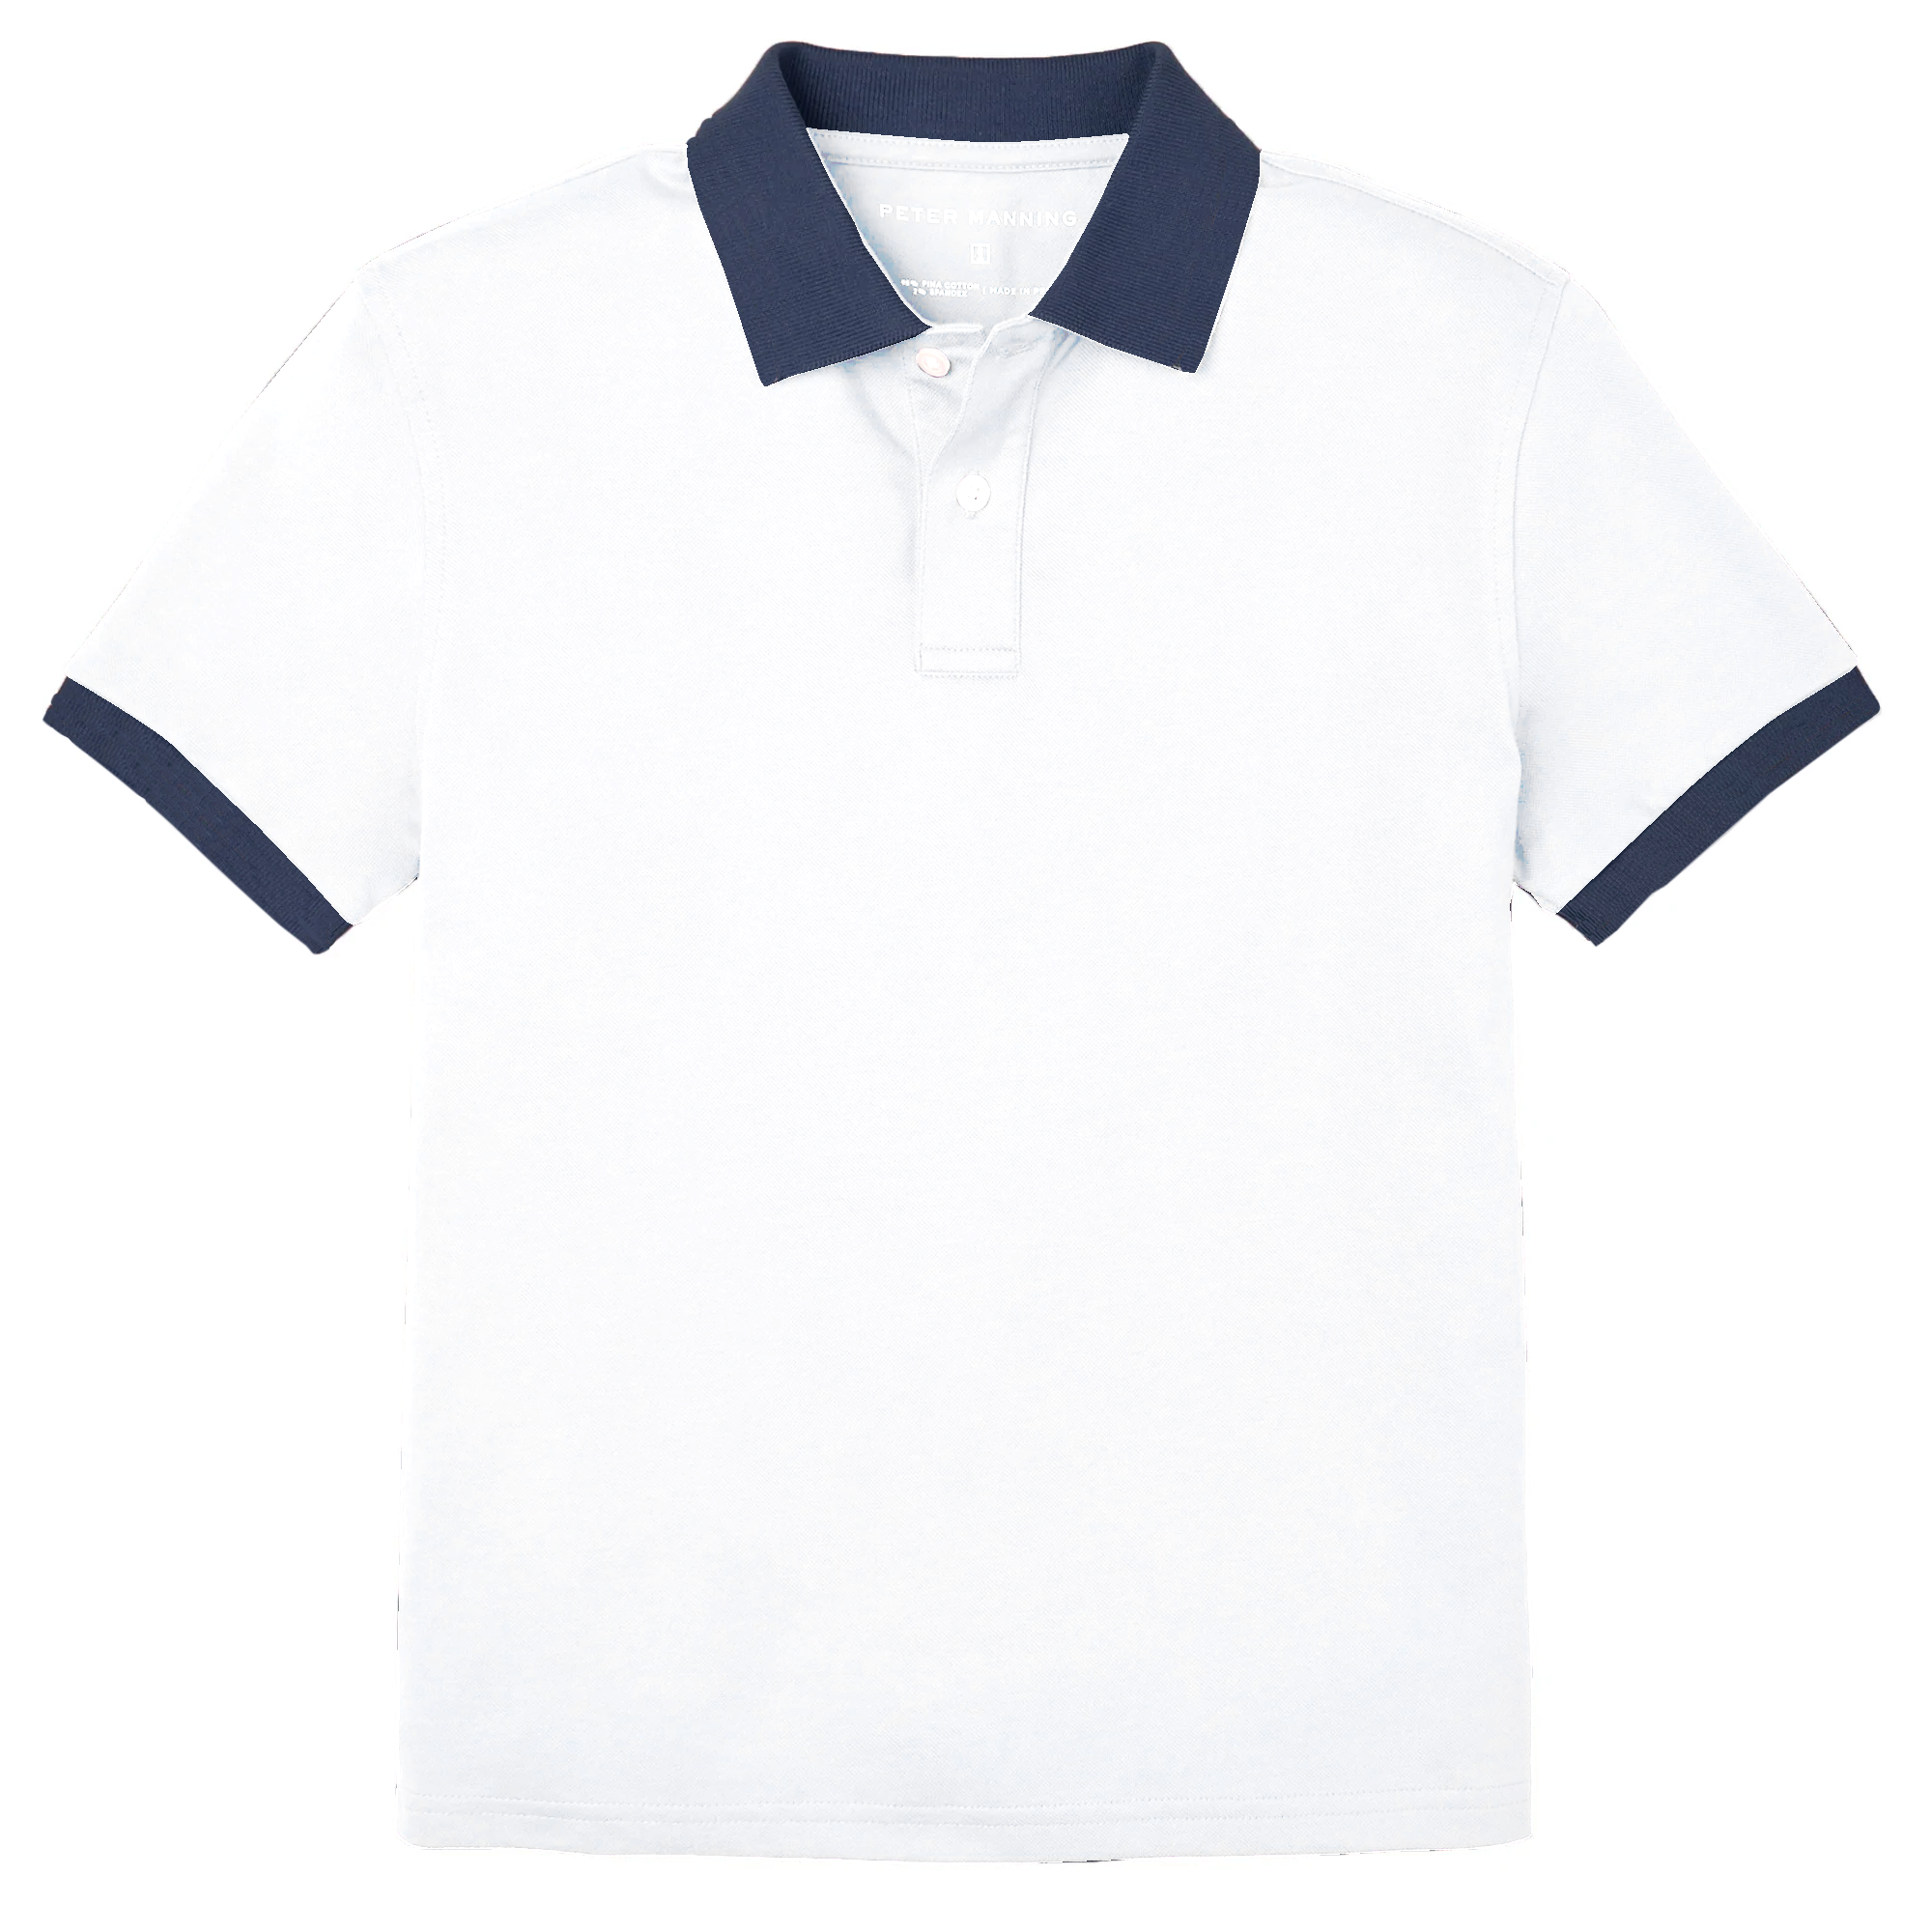 James Polo Shirt - White Tipped